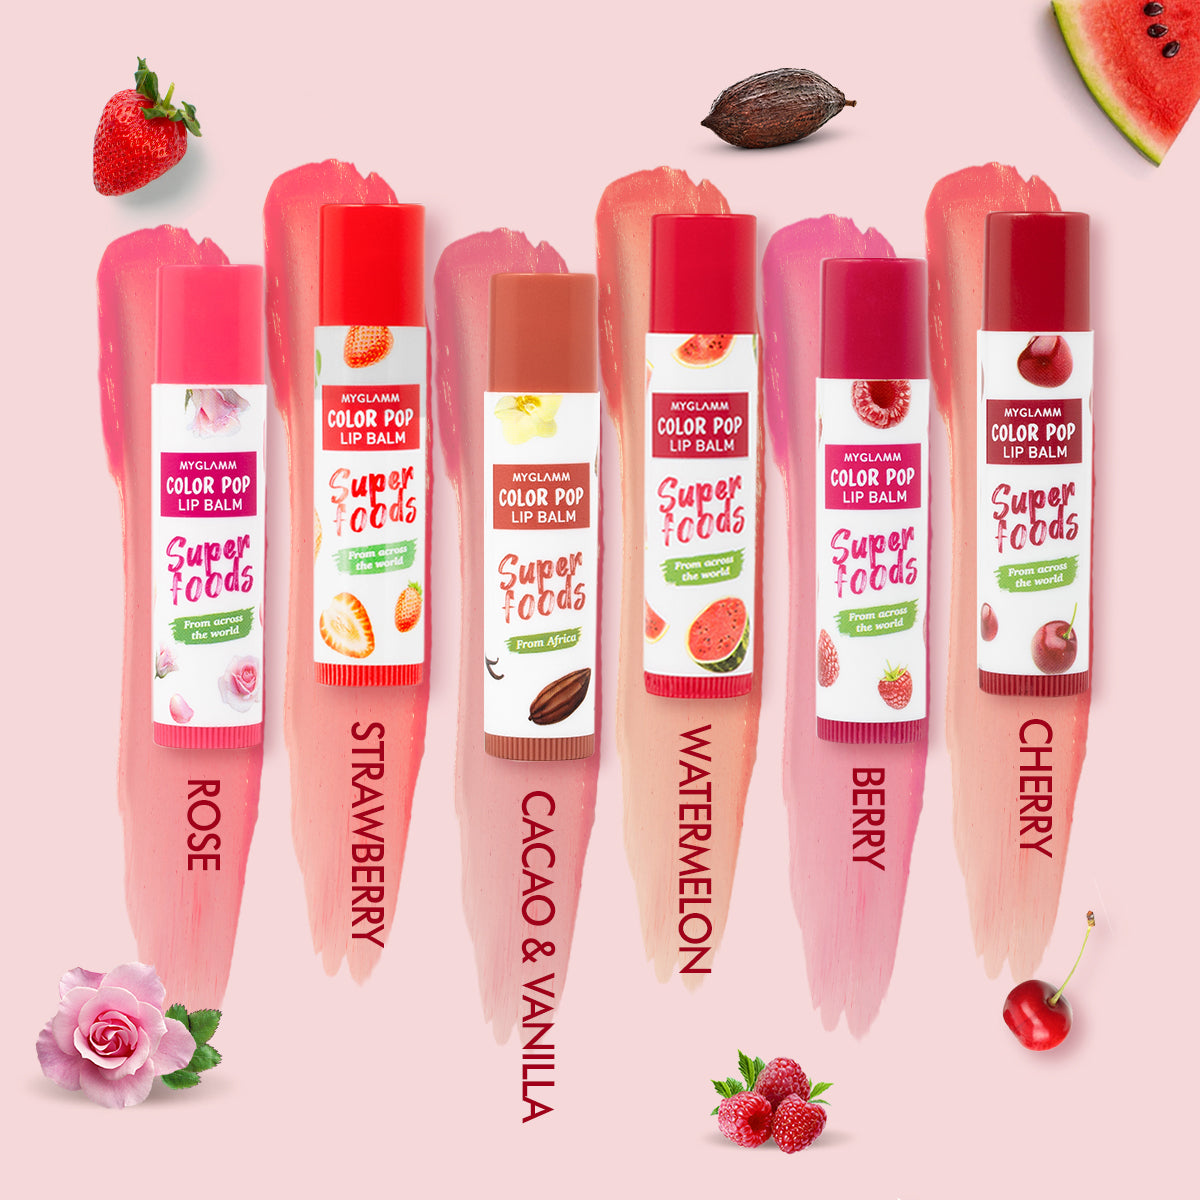 MyGlamm Color Pop Lip Balm-Strawberry-4.6gm